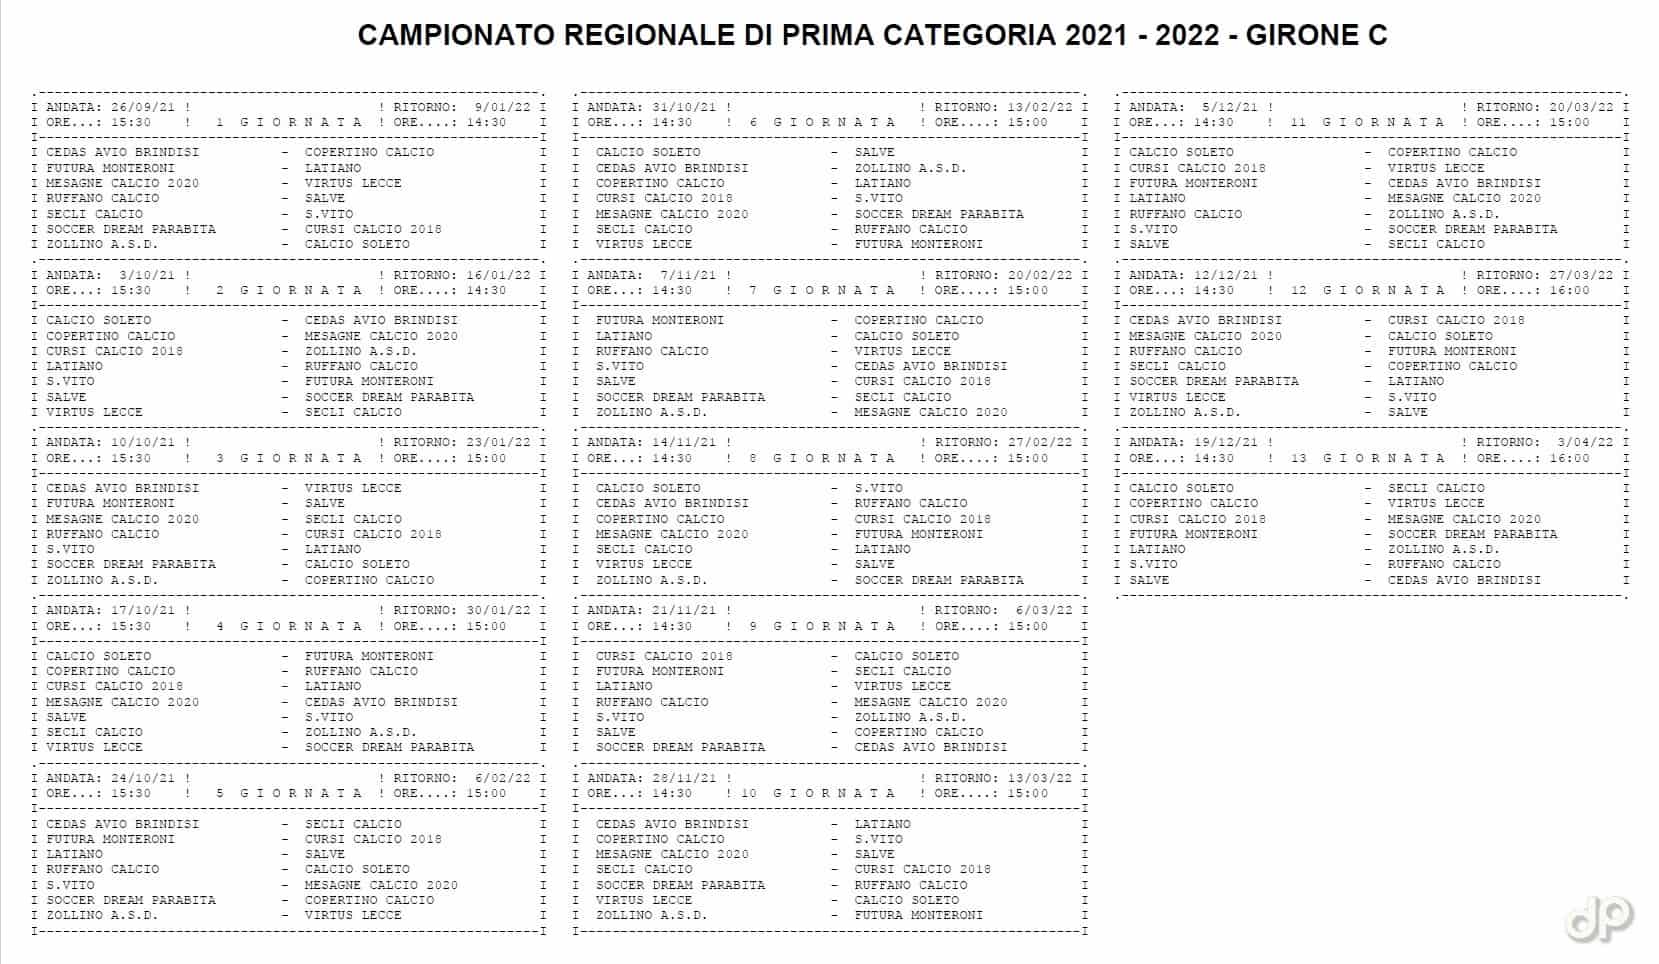 Calendario Prima Categoria pugliese girone C 2021-22